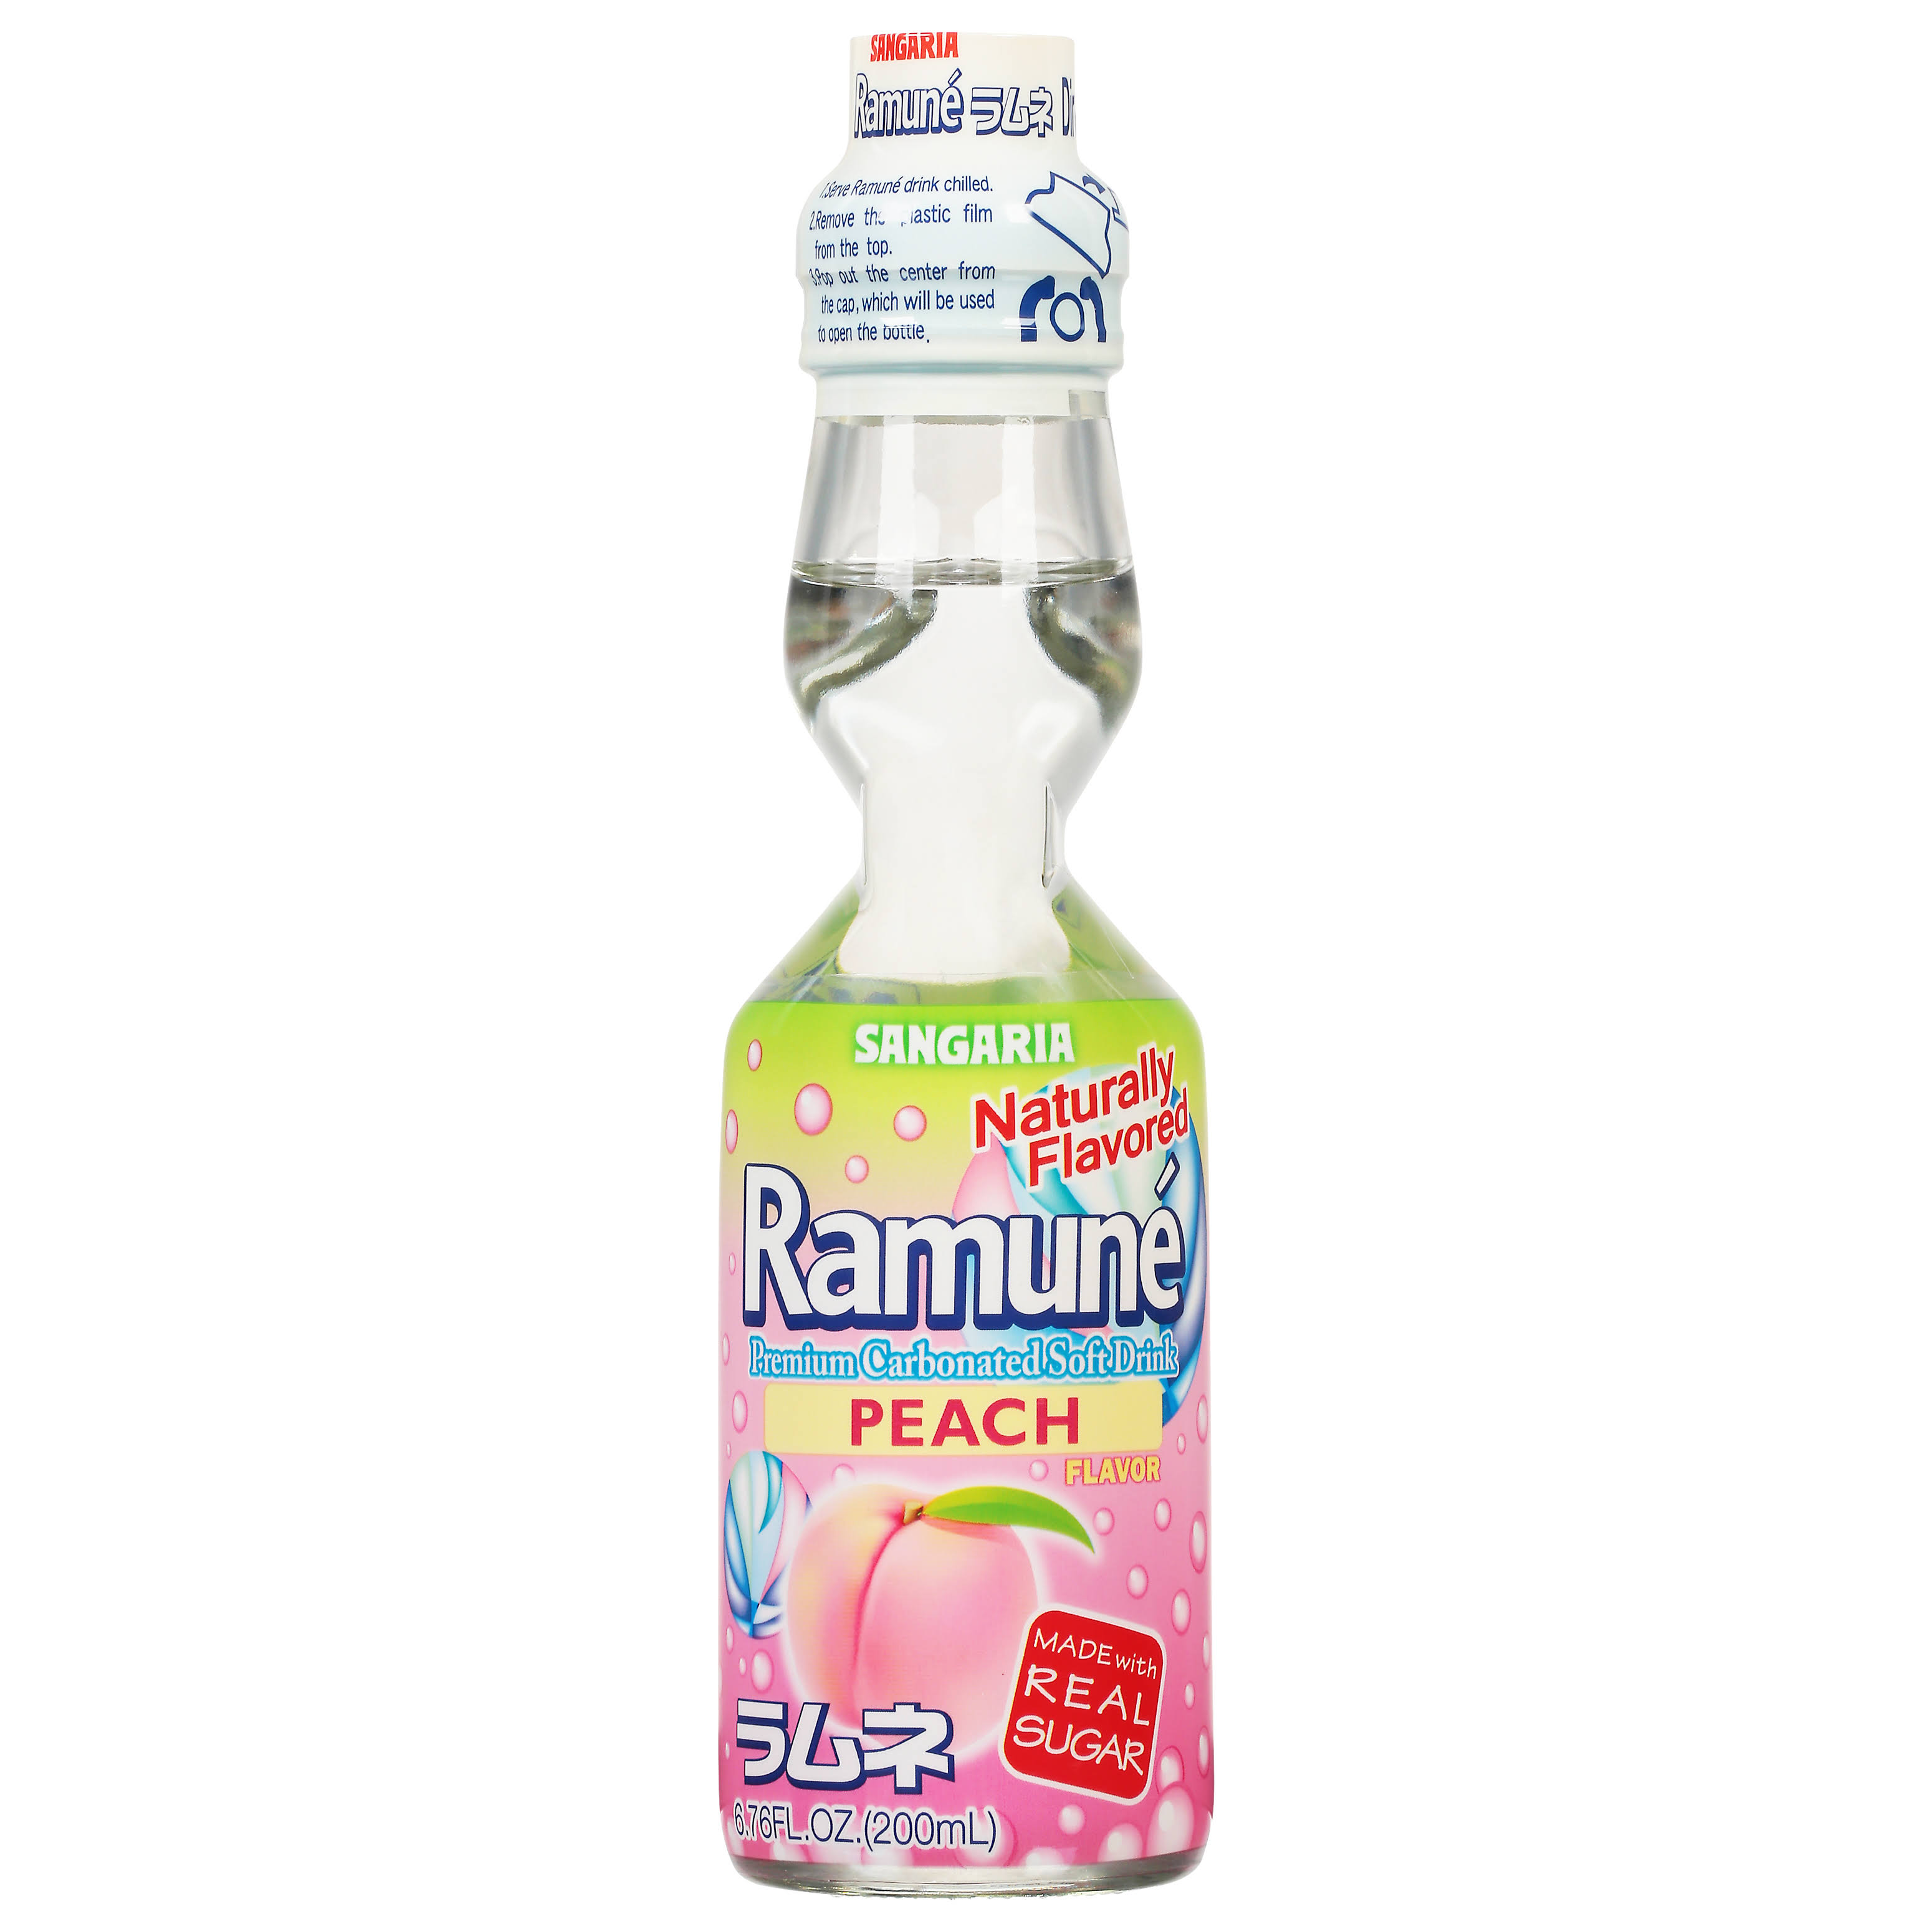 Ramune Soft Drink, Peach Flavor - 6.76 fl oz